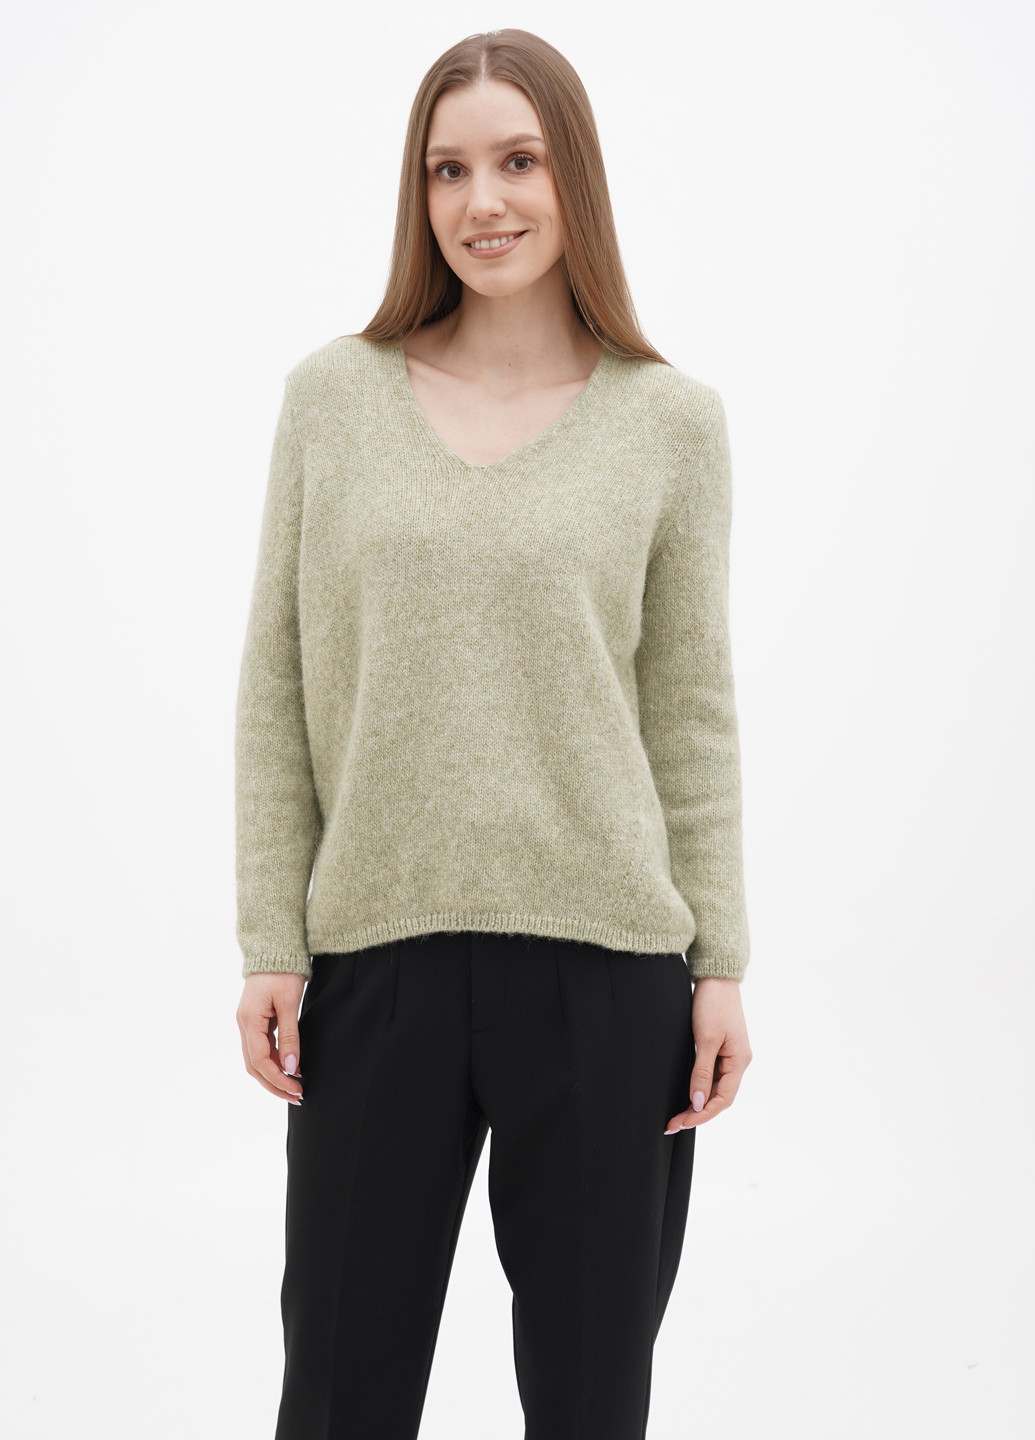 Оливковый зимний пуловер пуловер Monari